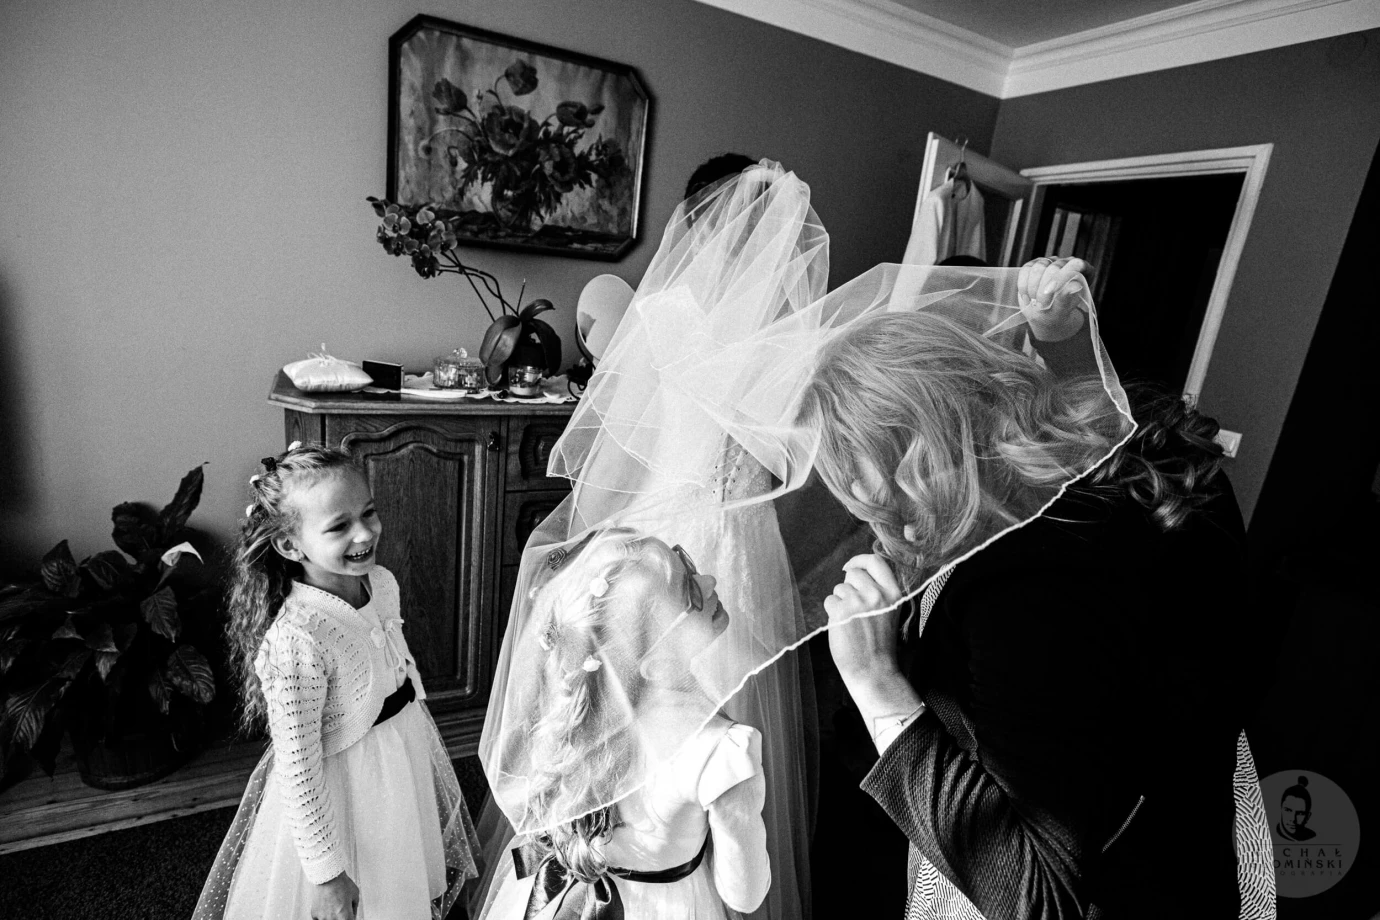 fotograf wroclaw fotografia-slubna-slominski portfolio zdjecia slubne inspiracje wesele plener slubny sesja slubna